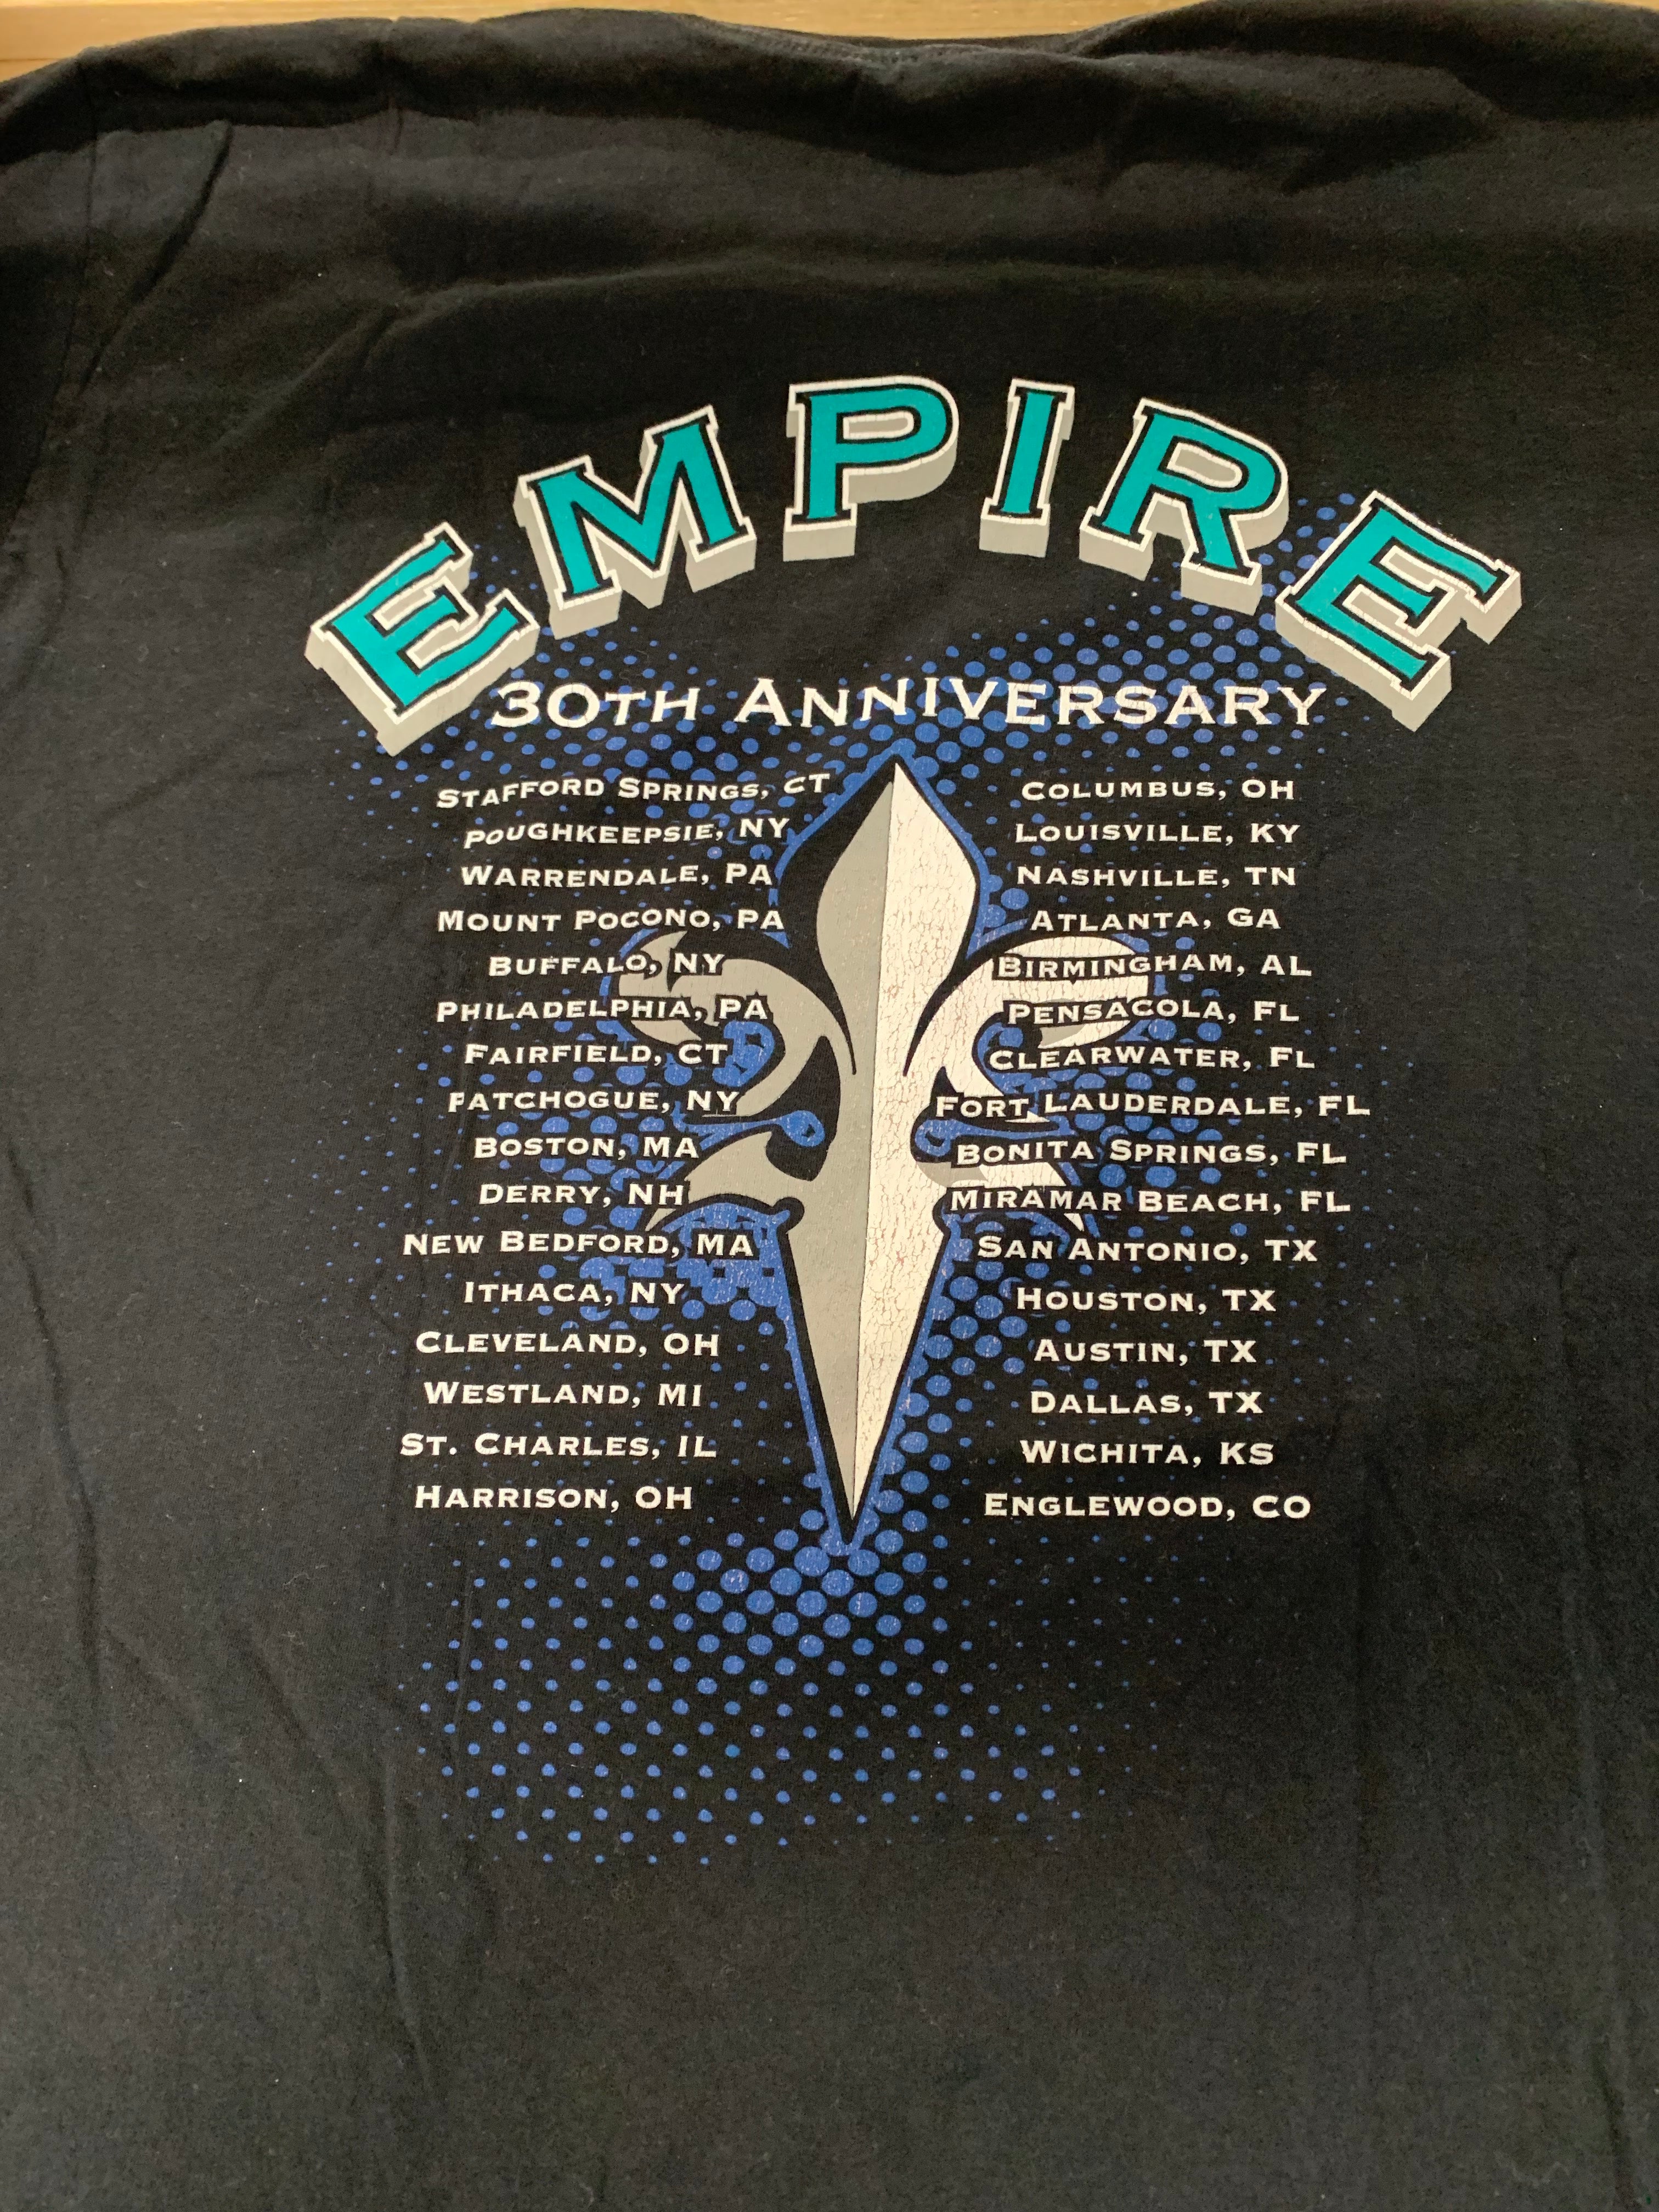 Geoff Tate Empire 30th Anniversary Tour T-Shirt, Black, L